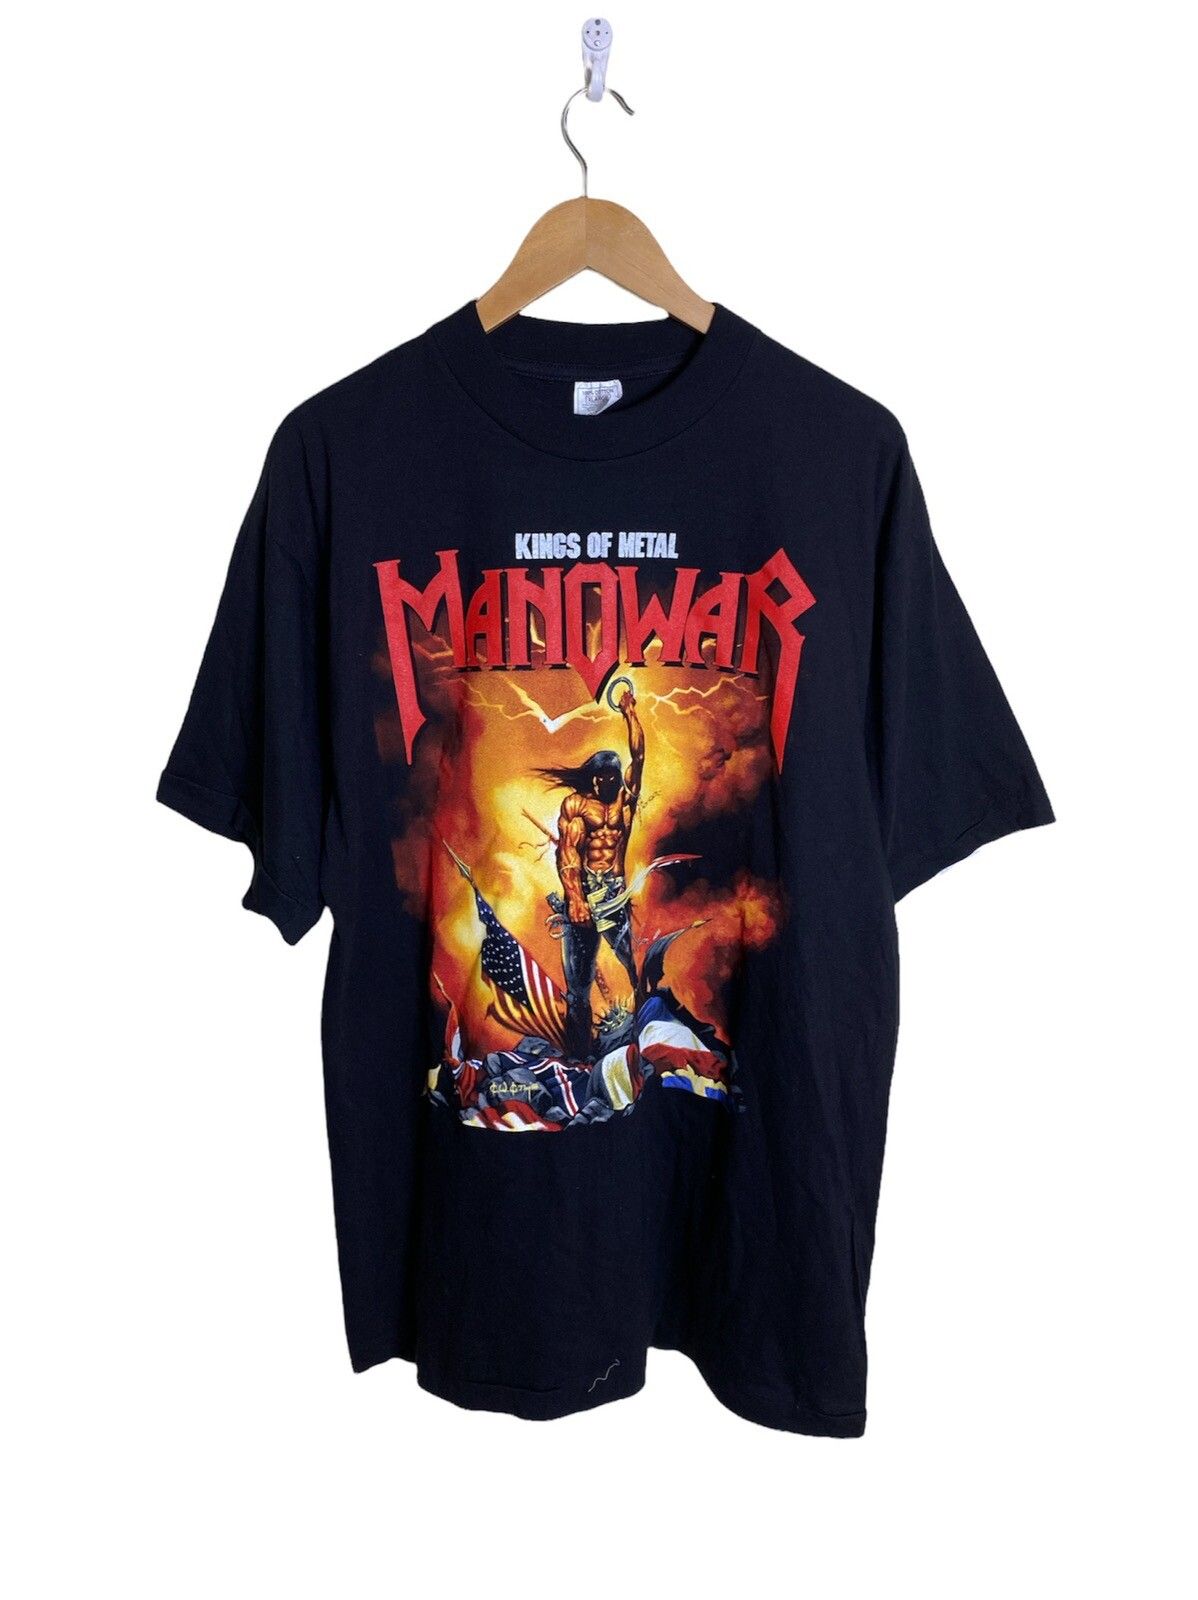 Vintage Euro 90s Manowar World Tour Tshirt - 1